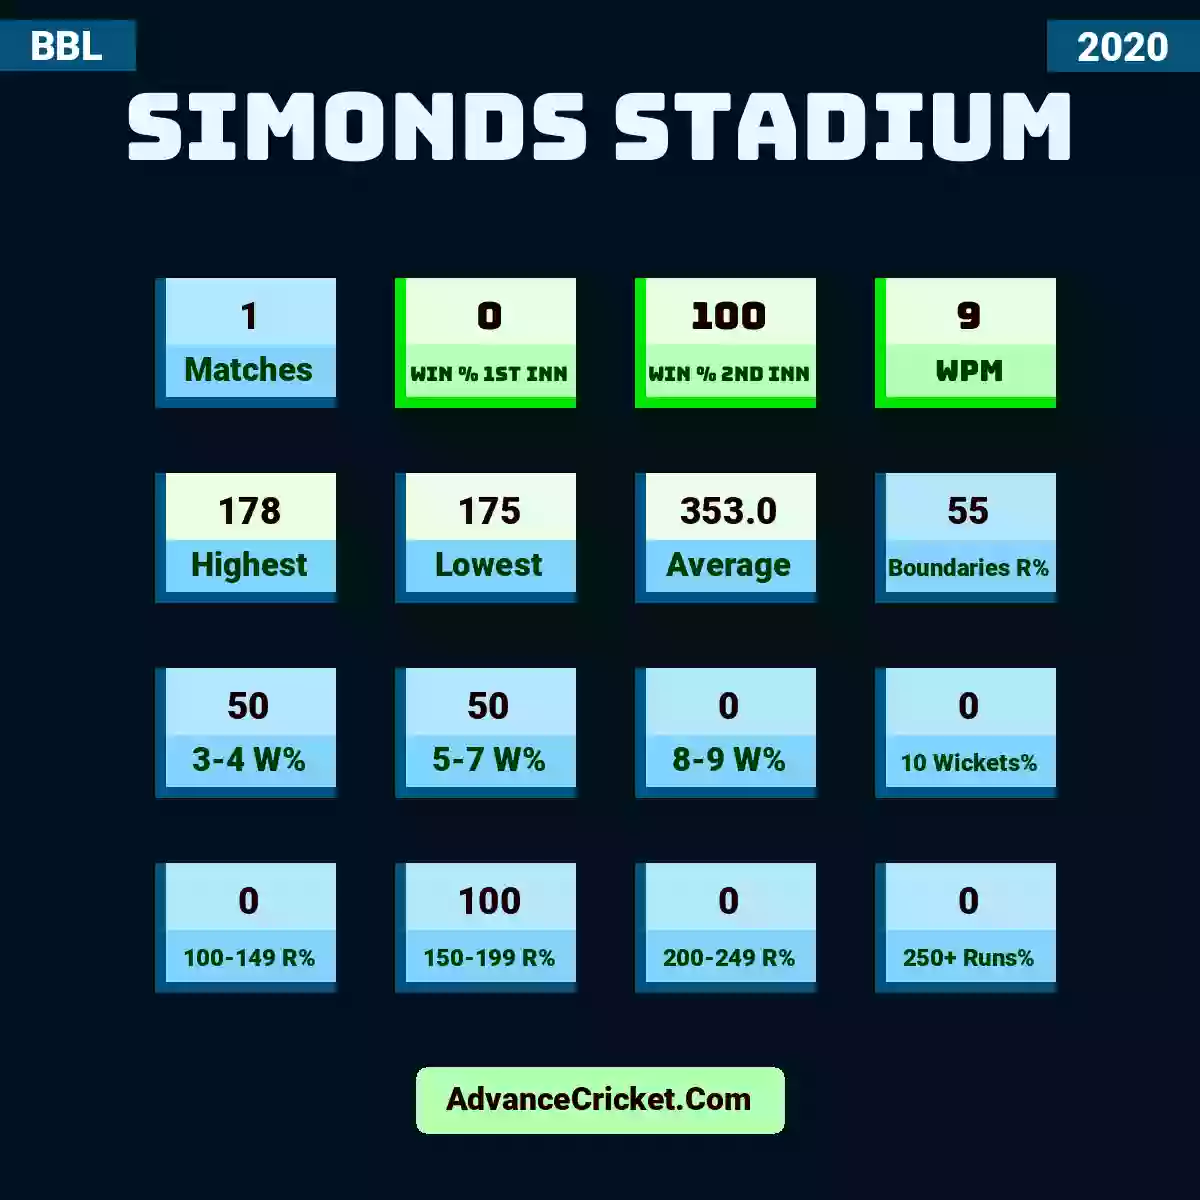 Image showing Simonds Stadium with Matches: 1, Win % 1st Inn: 0, Win % 2nd Inn: 100, WPM: 9, Highest: 178, Lowest: 175, Average: 353.0, Boundaries R%: 55, 3-4 W%: 50, 5-7 W%: 50, 8-9 W%: 0, 10 Wickets%: 0, 100-149 R%: 0, 150-199 R%: 100, 200-249 R%: 0, 250+ Runs%: 0.